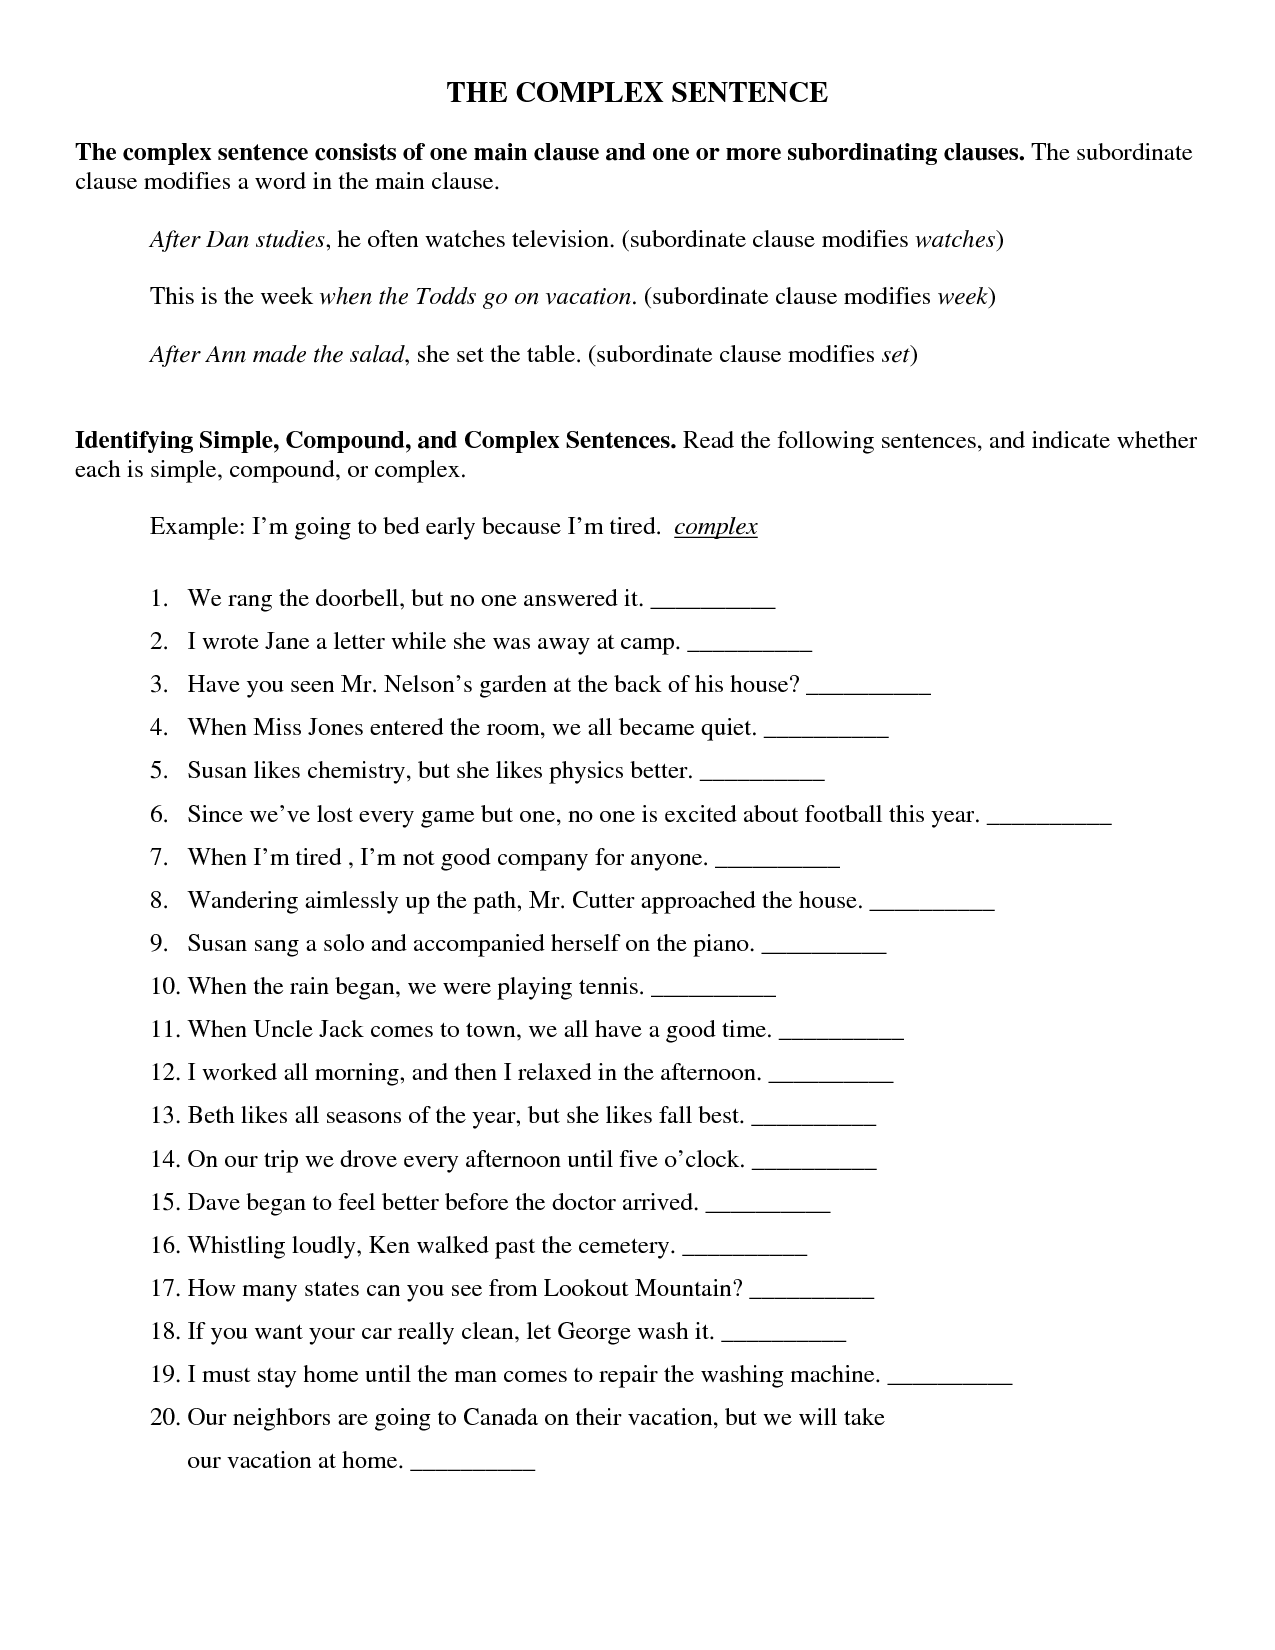 complex-compound-and-simple-sentences-worksheet